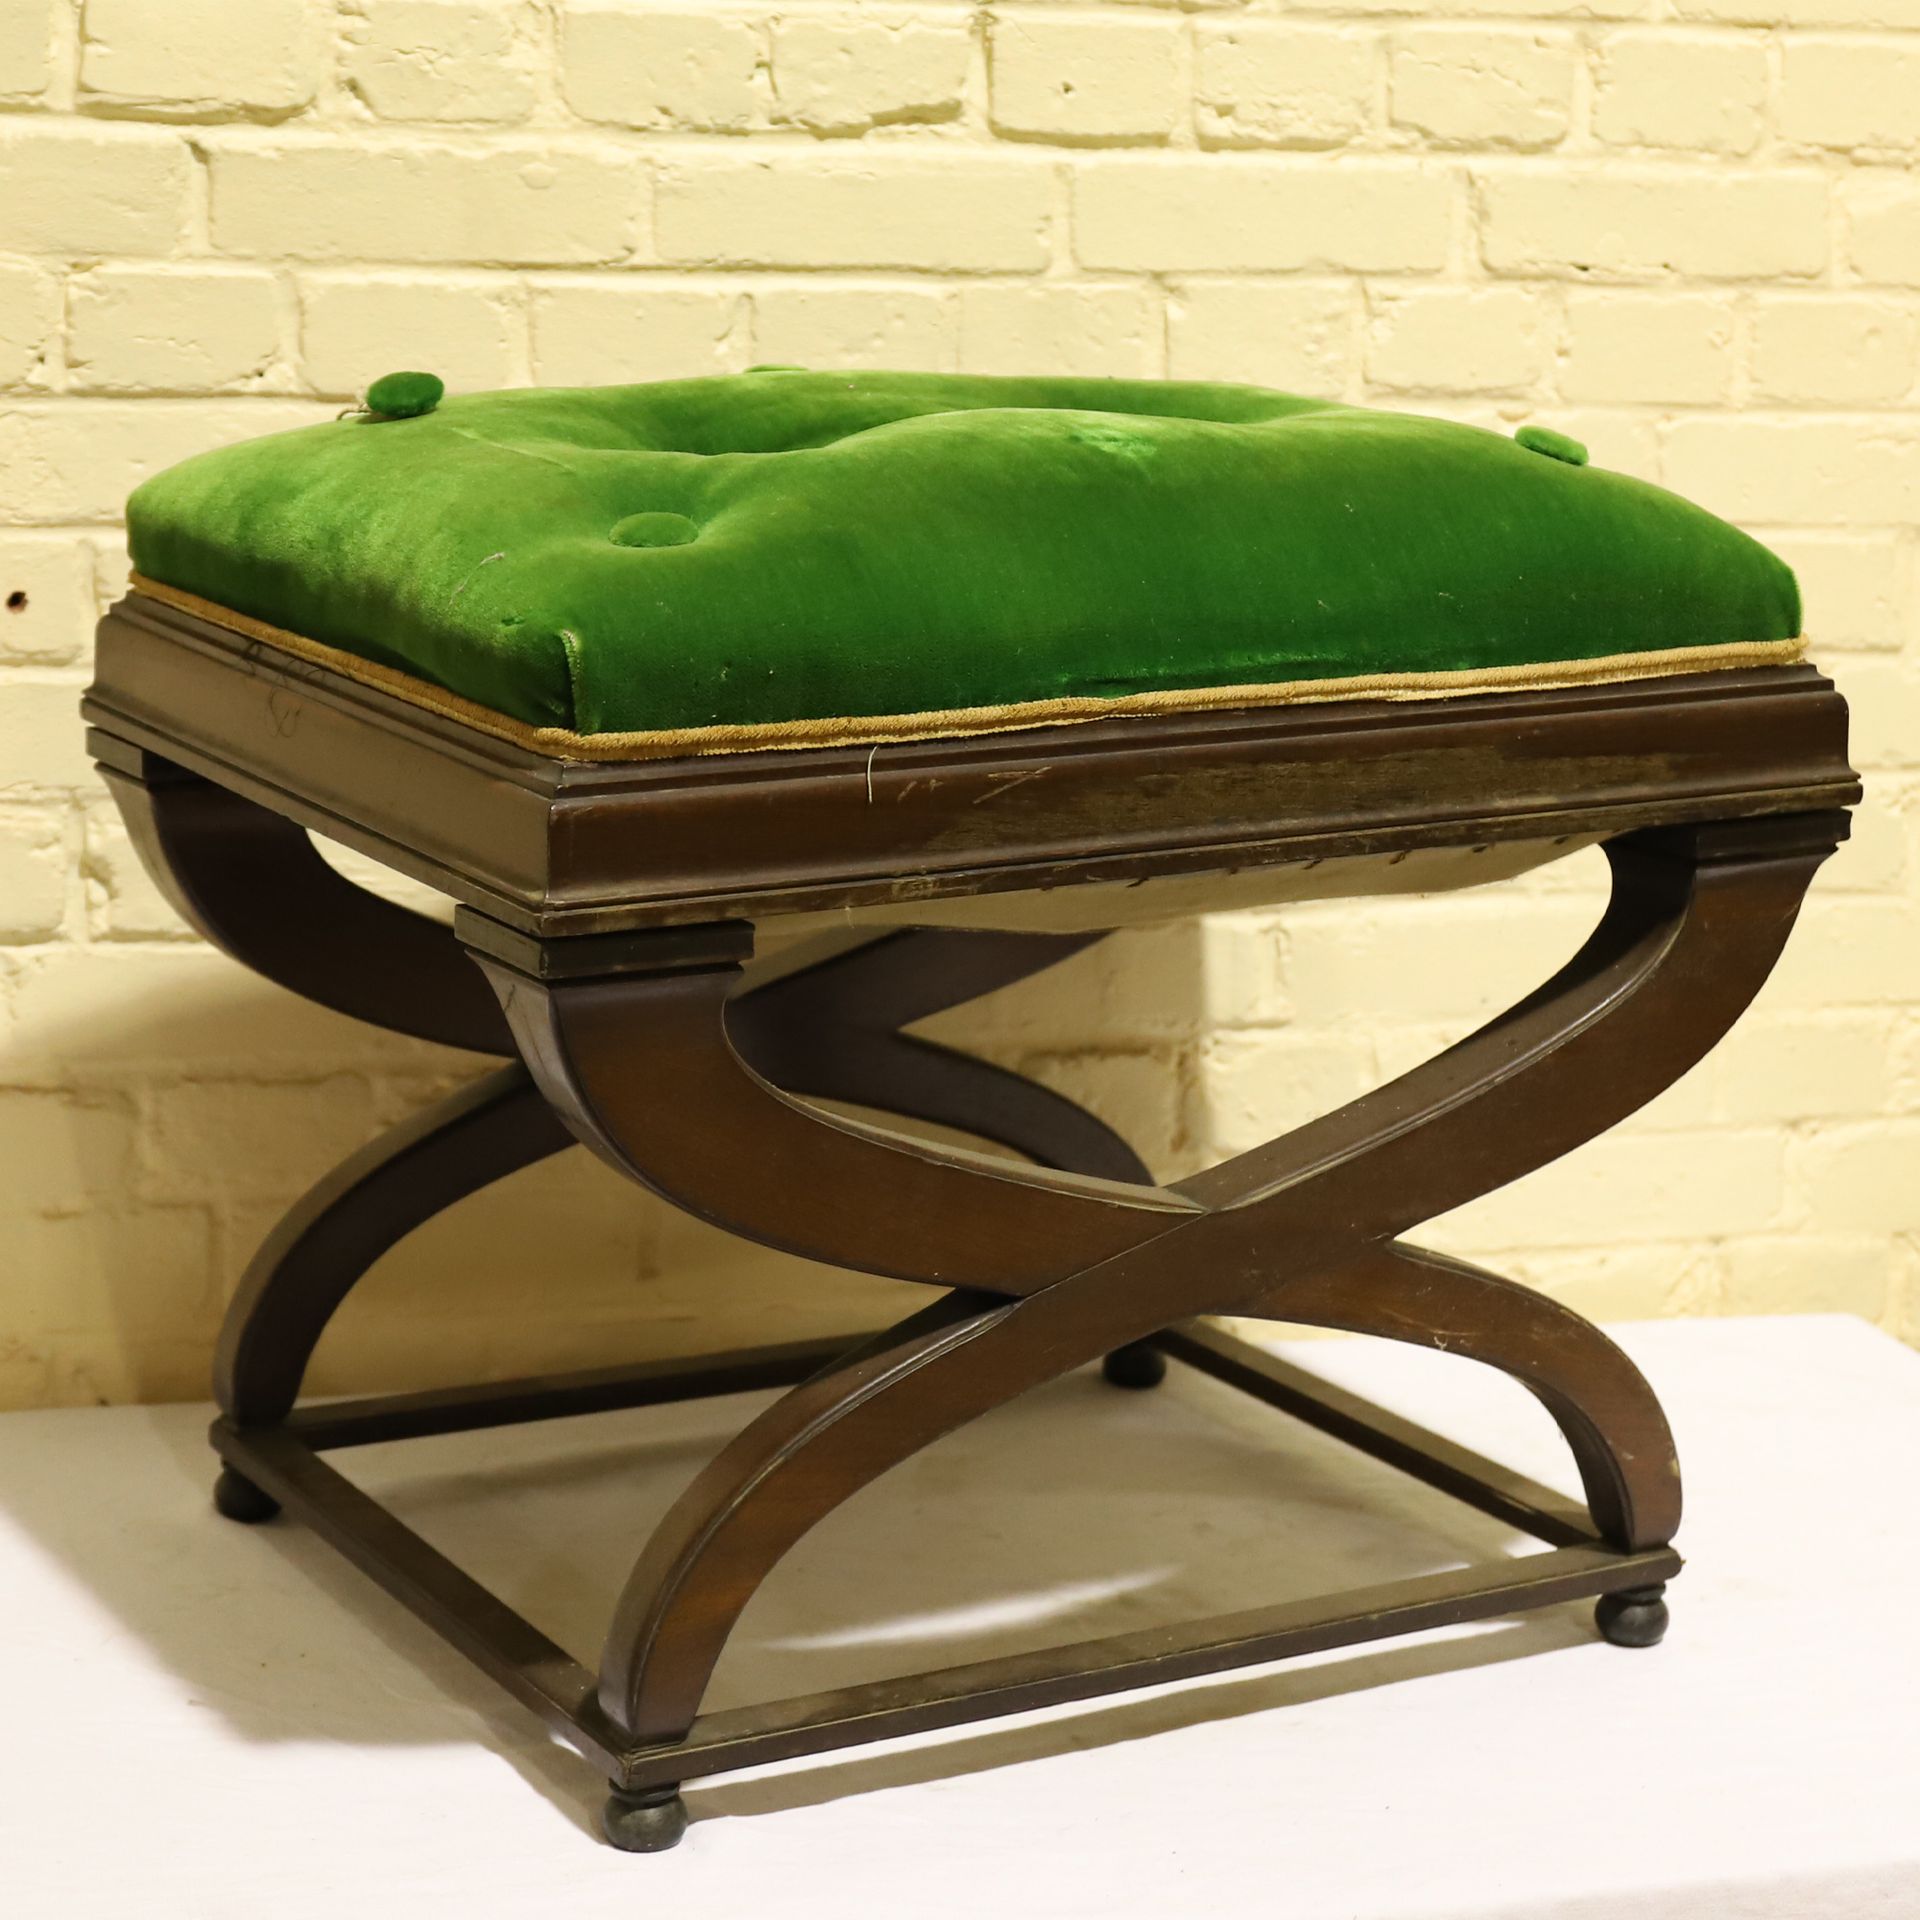 Null MAHOGANY X-SHAPED STOOL

Green velvet upholstery

In the state; restoration&hellip;